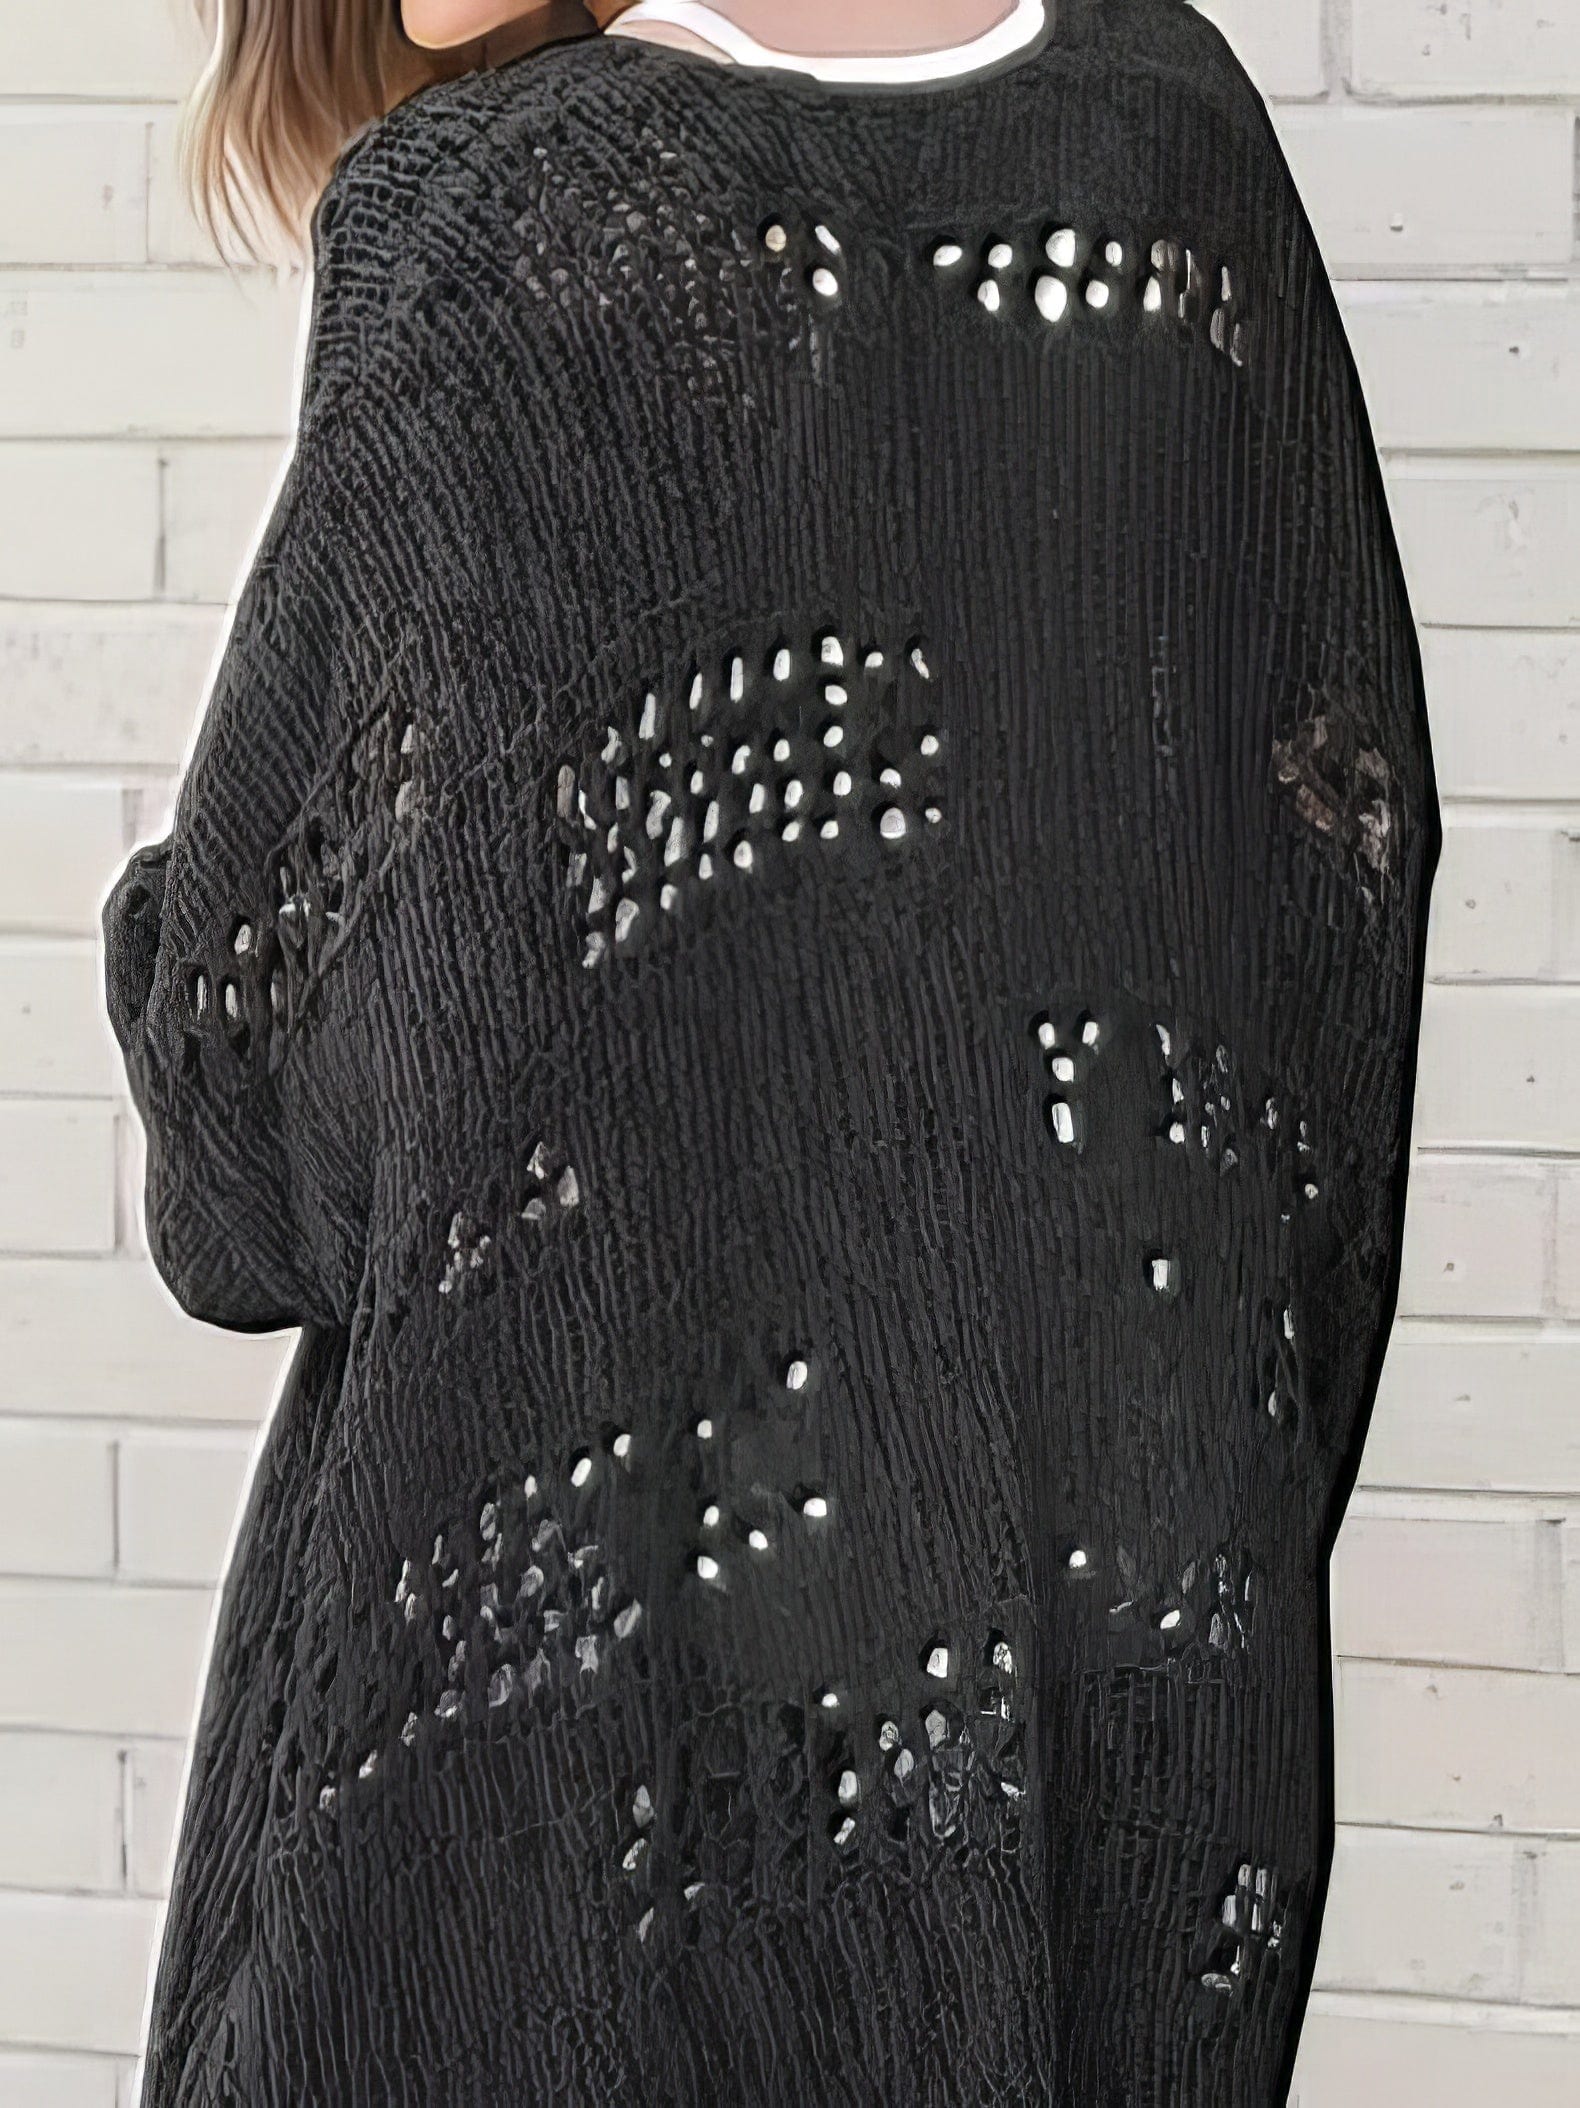 MsDressly Cardigans Crochet Loose Long Sleeve Knitted Sweater Cardigan